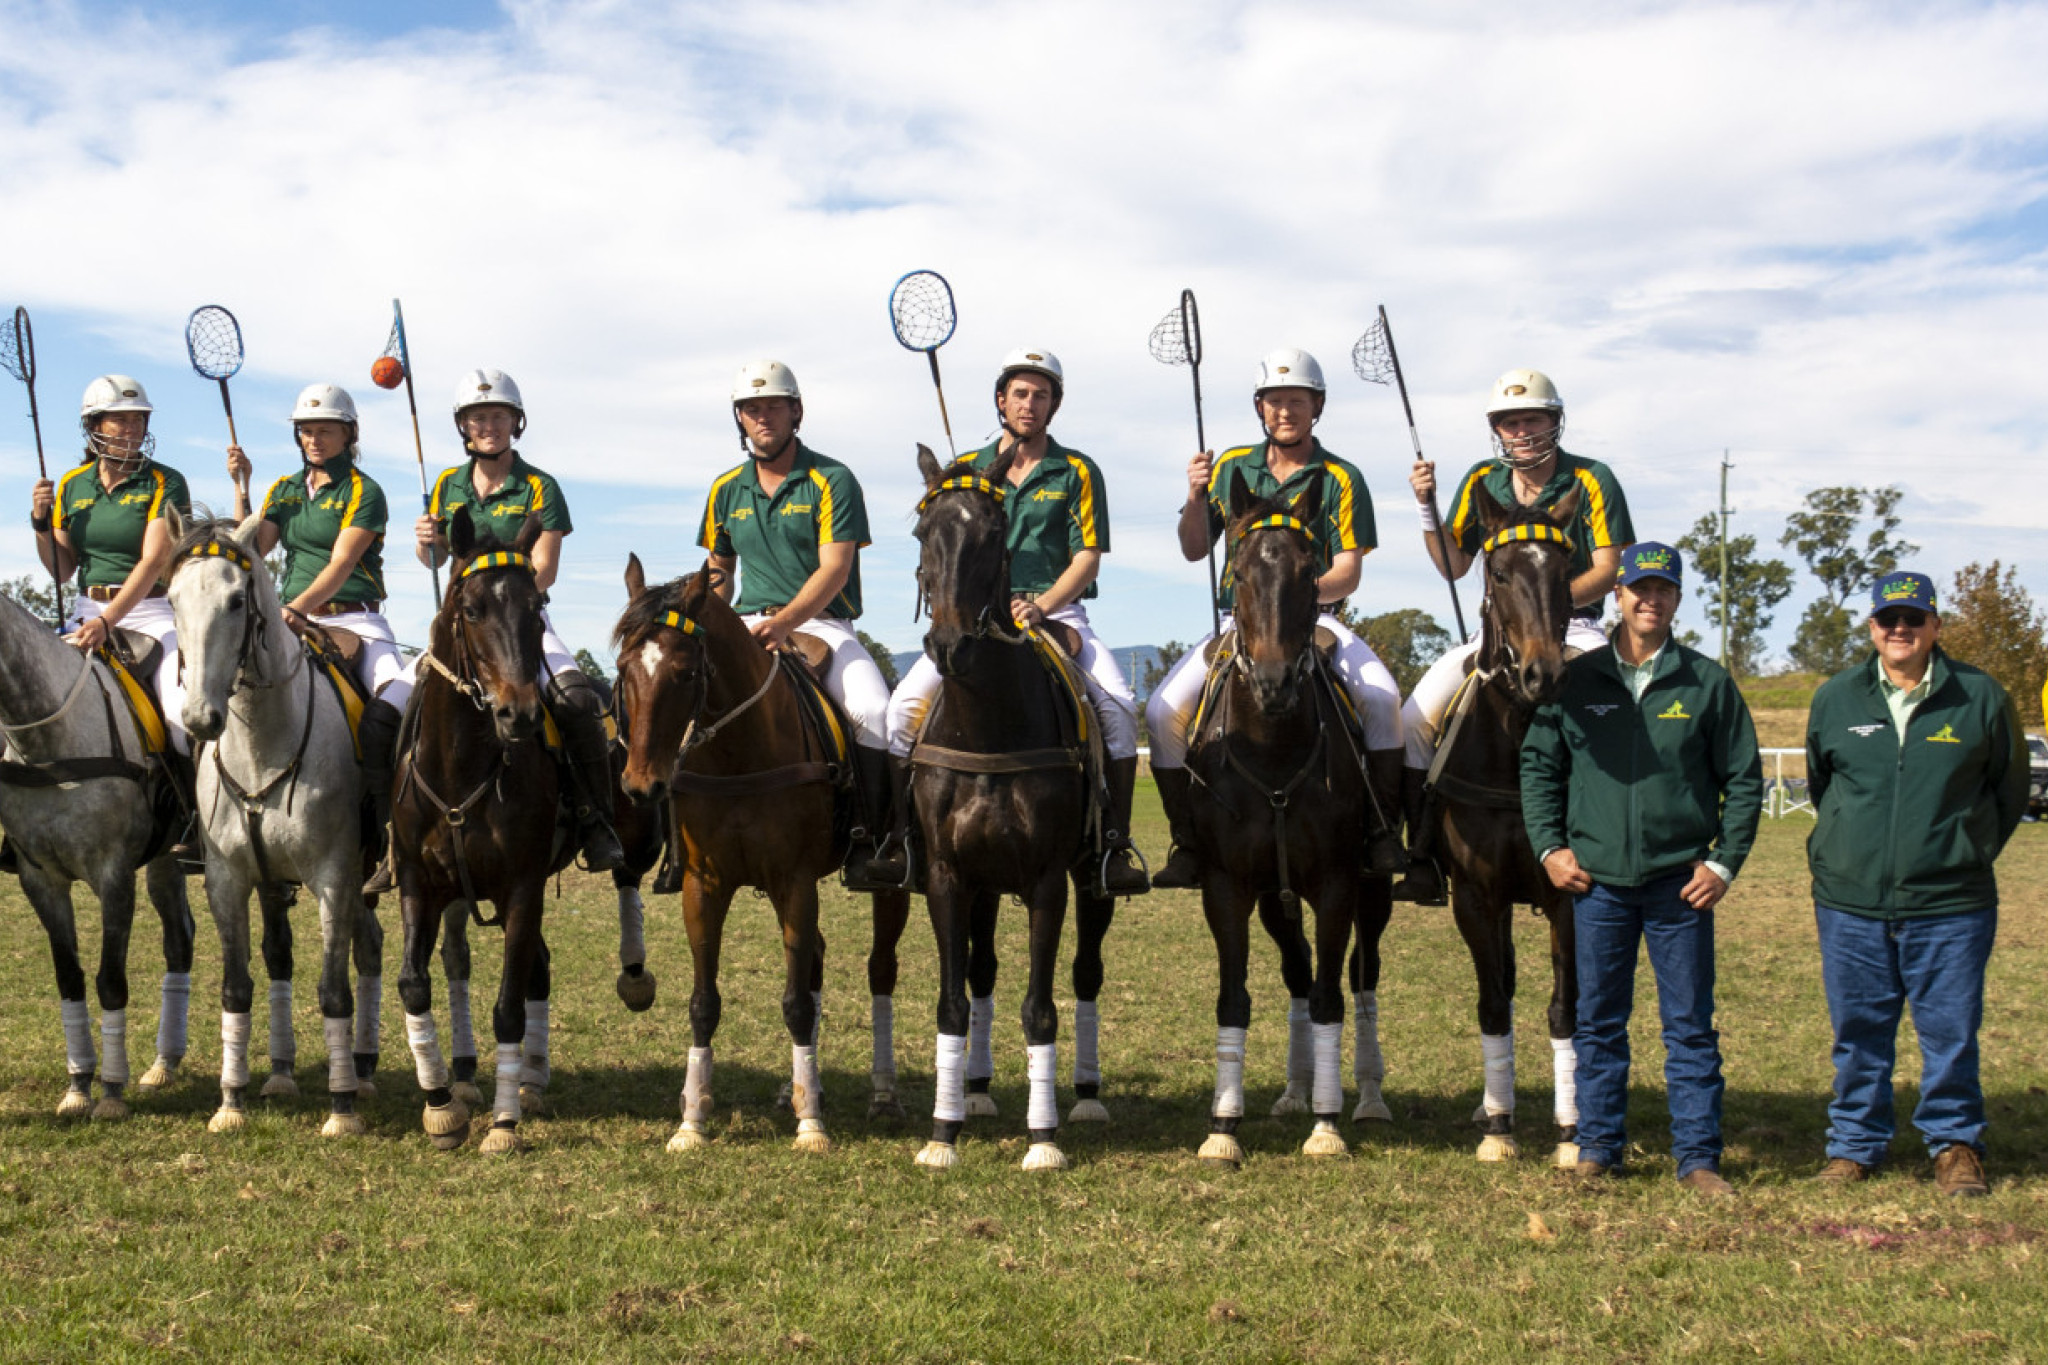 The Australian World Cup Polocrosse team. Photo credit: Amanda Dunstan Photography.